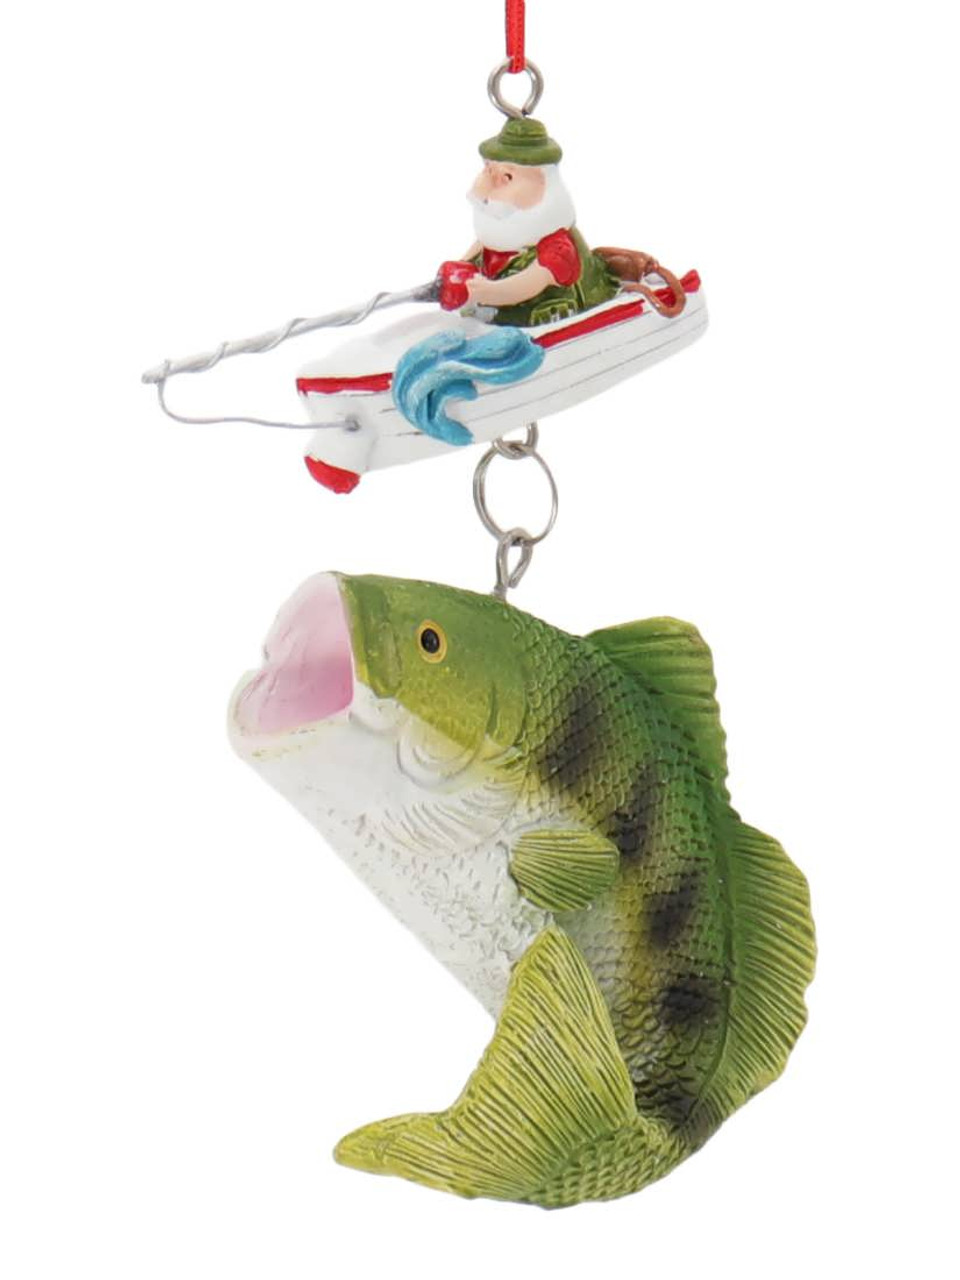 Santa Fishing for Big Fish Ornament 4 1/4 by Kurt Adler